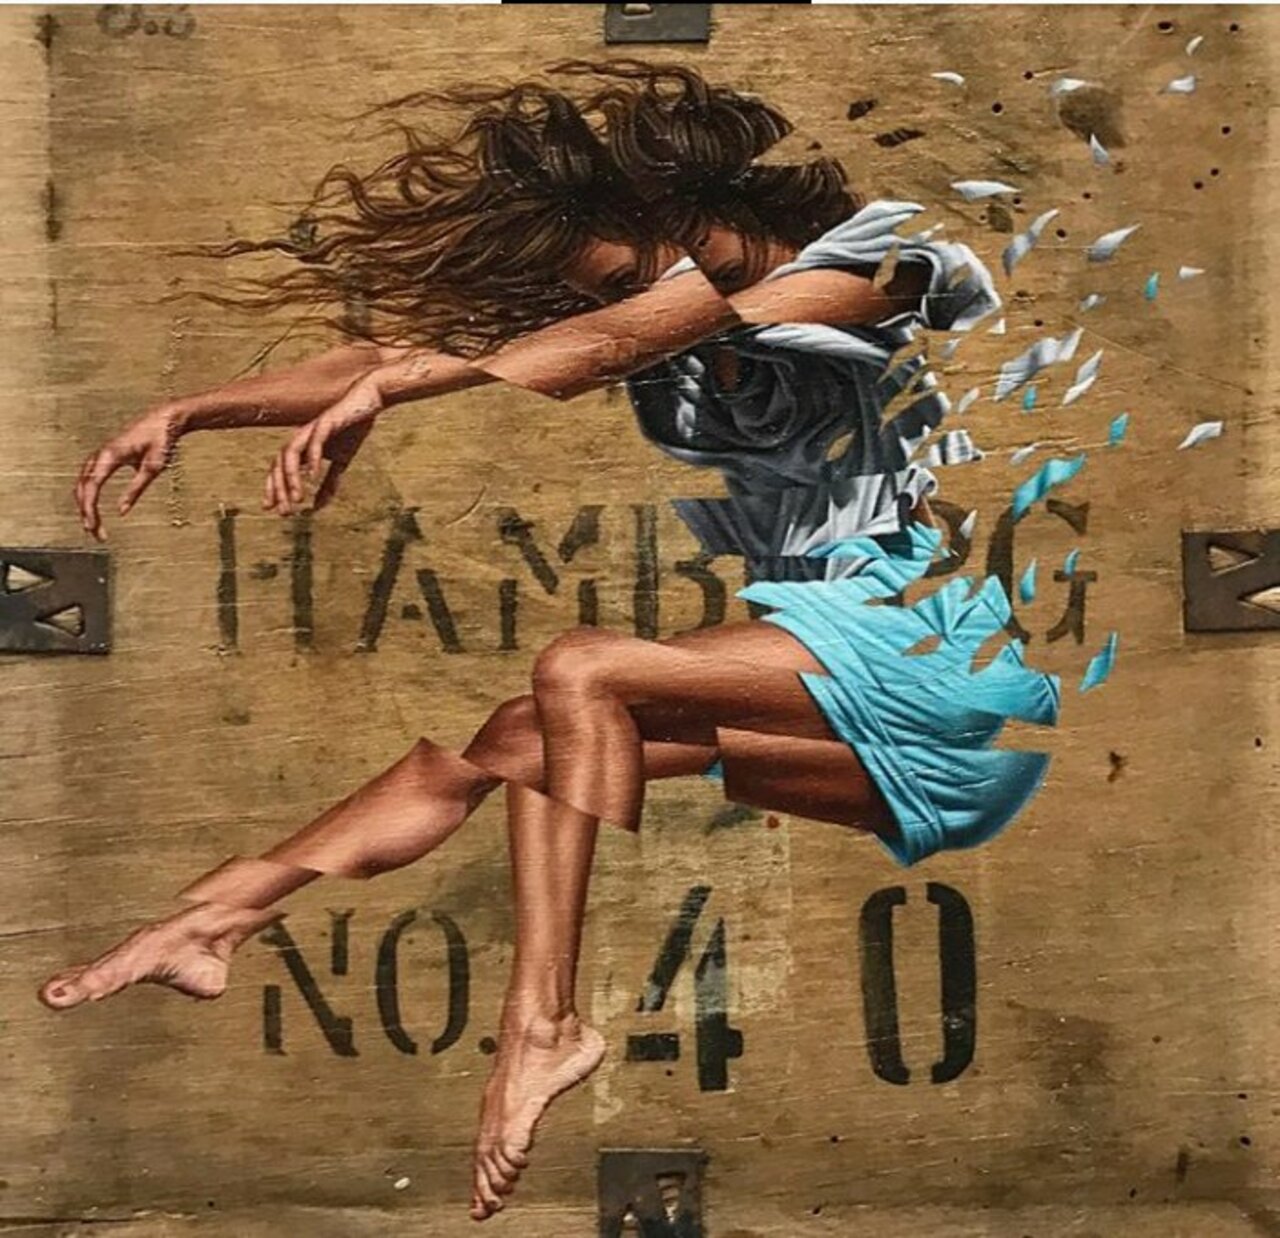 Rough wind.  In pieces#miami #streetart https://t.co/bpeBpu9hgJ